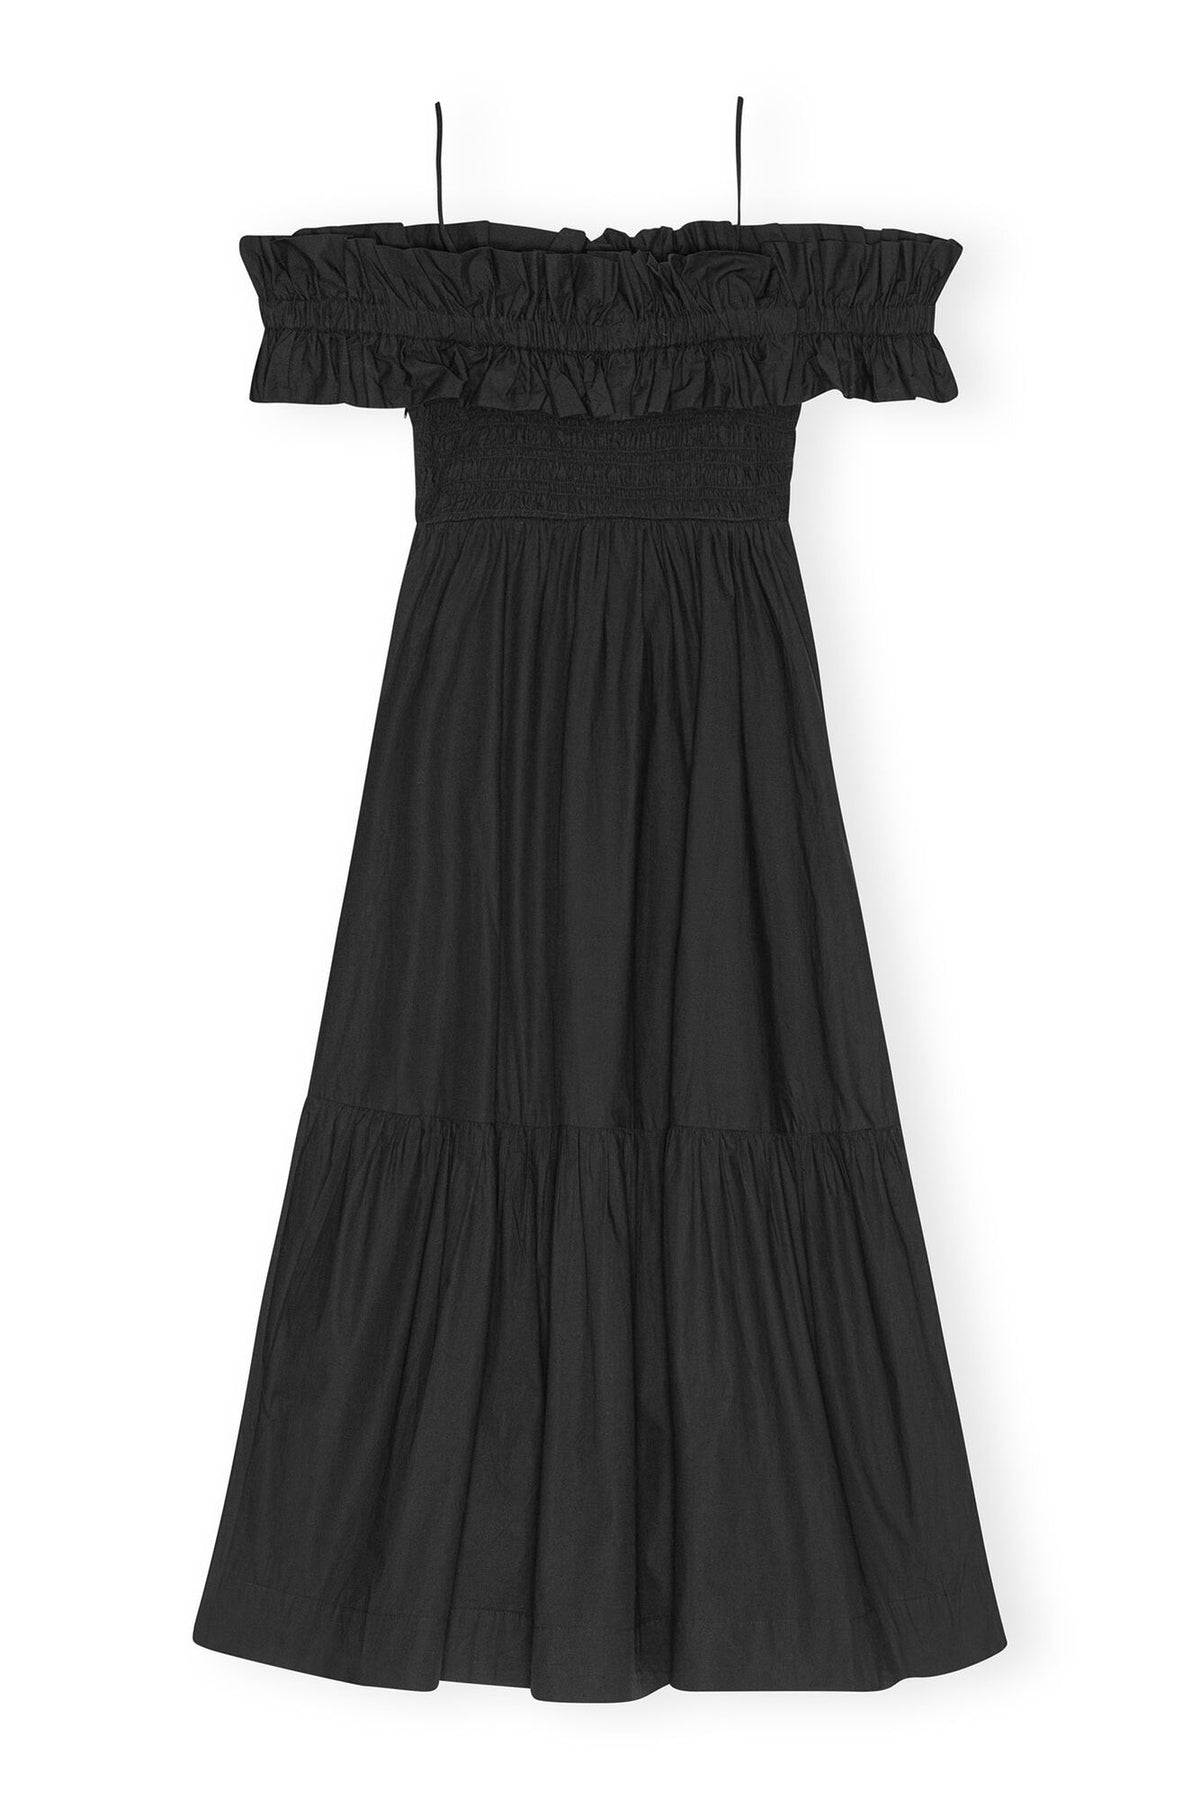 GANNI F9168 Cotton Poplin Smock Dress in Black